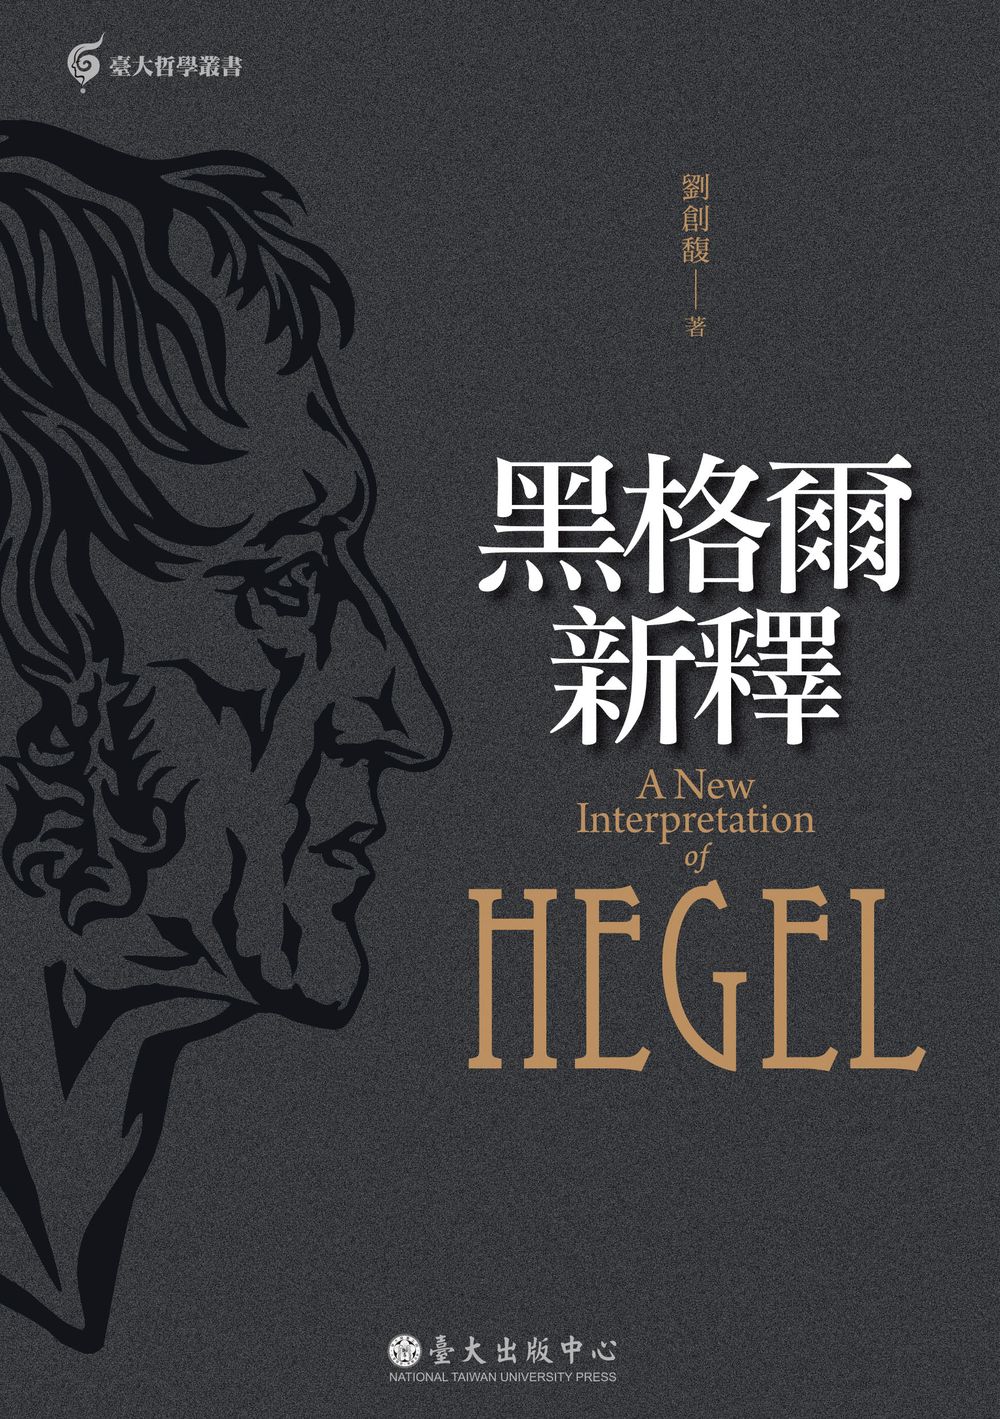 A New Interpretation of Hegel